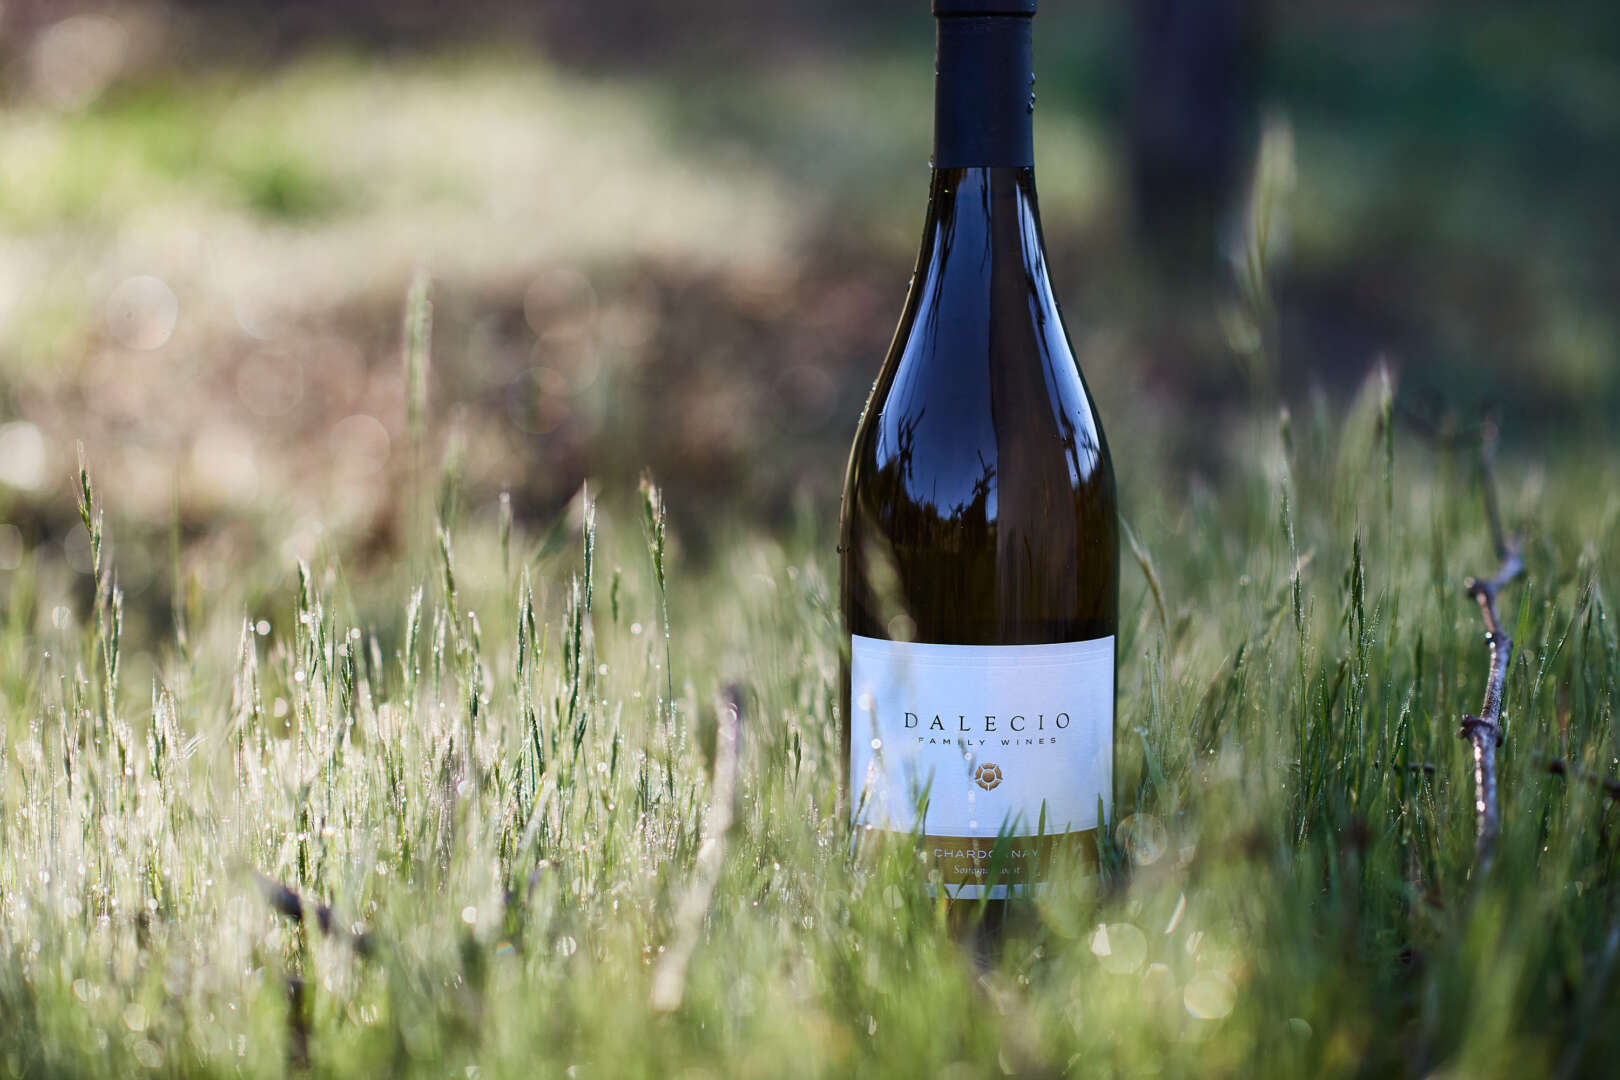 Dalecio Chardonnay in grass